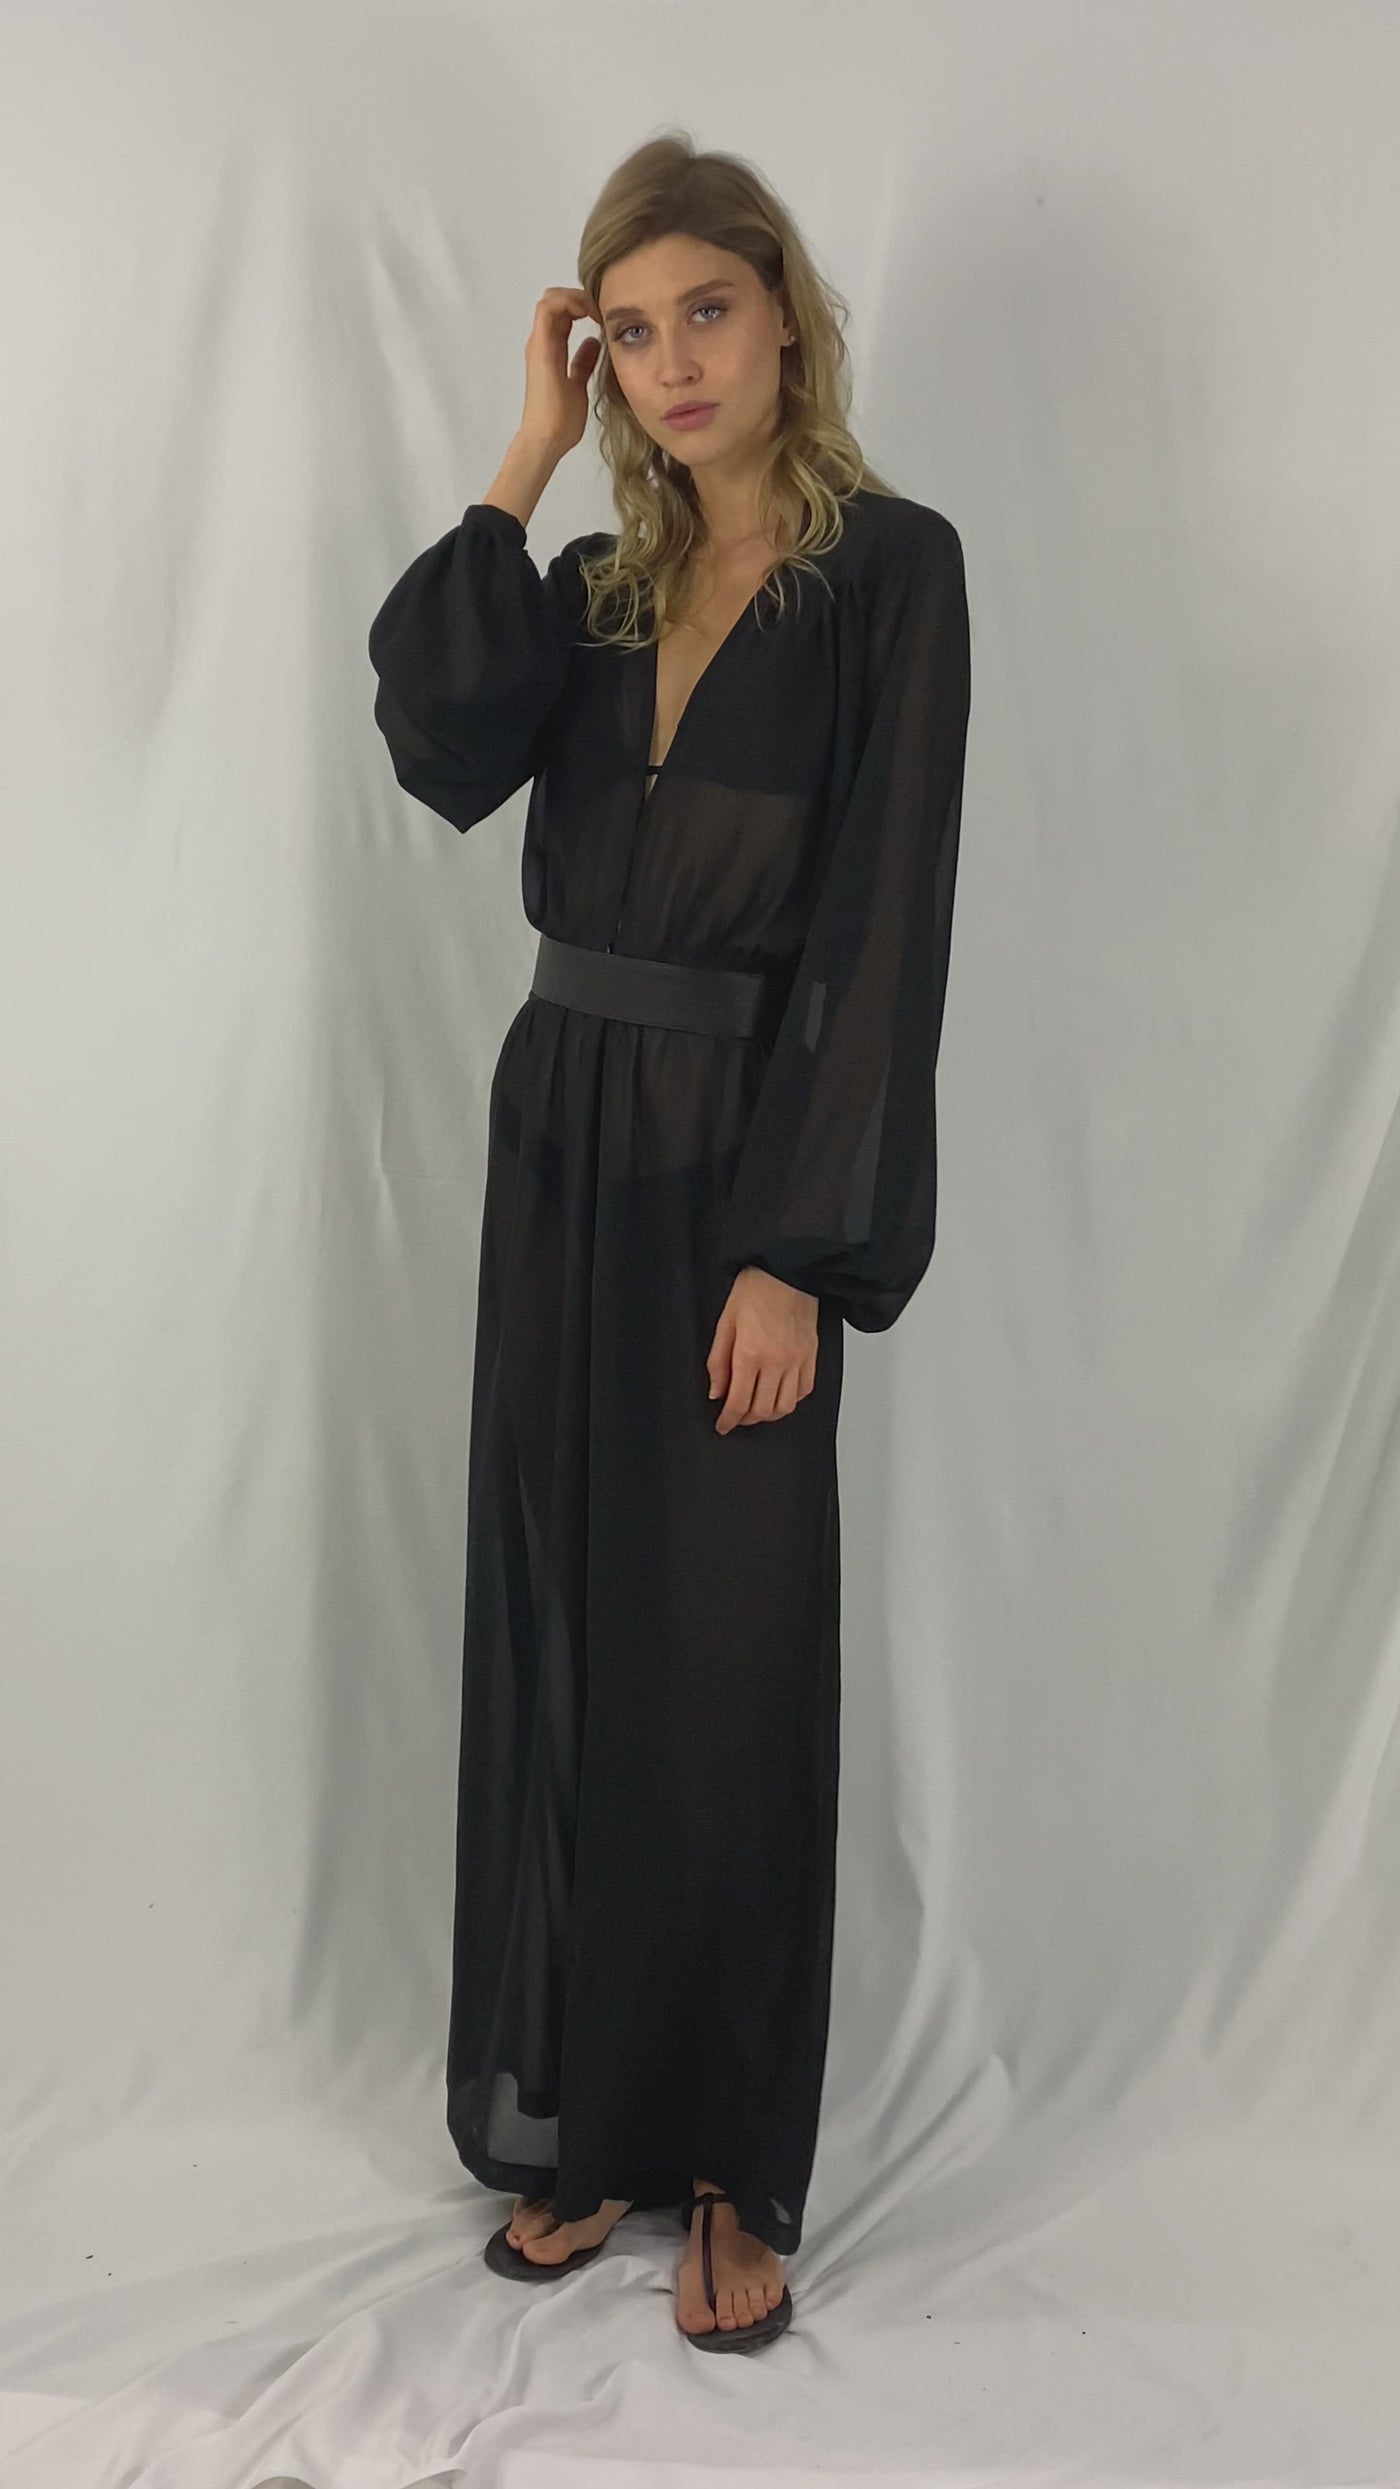 Oasis Sheer long sleeve Chiffon Jumpsuit in black Noir mesh from Love Khaos Resort Wear brand.